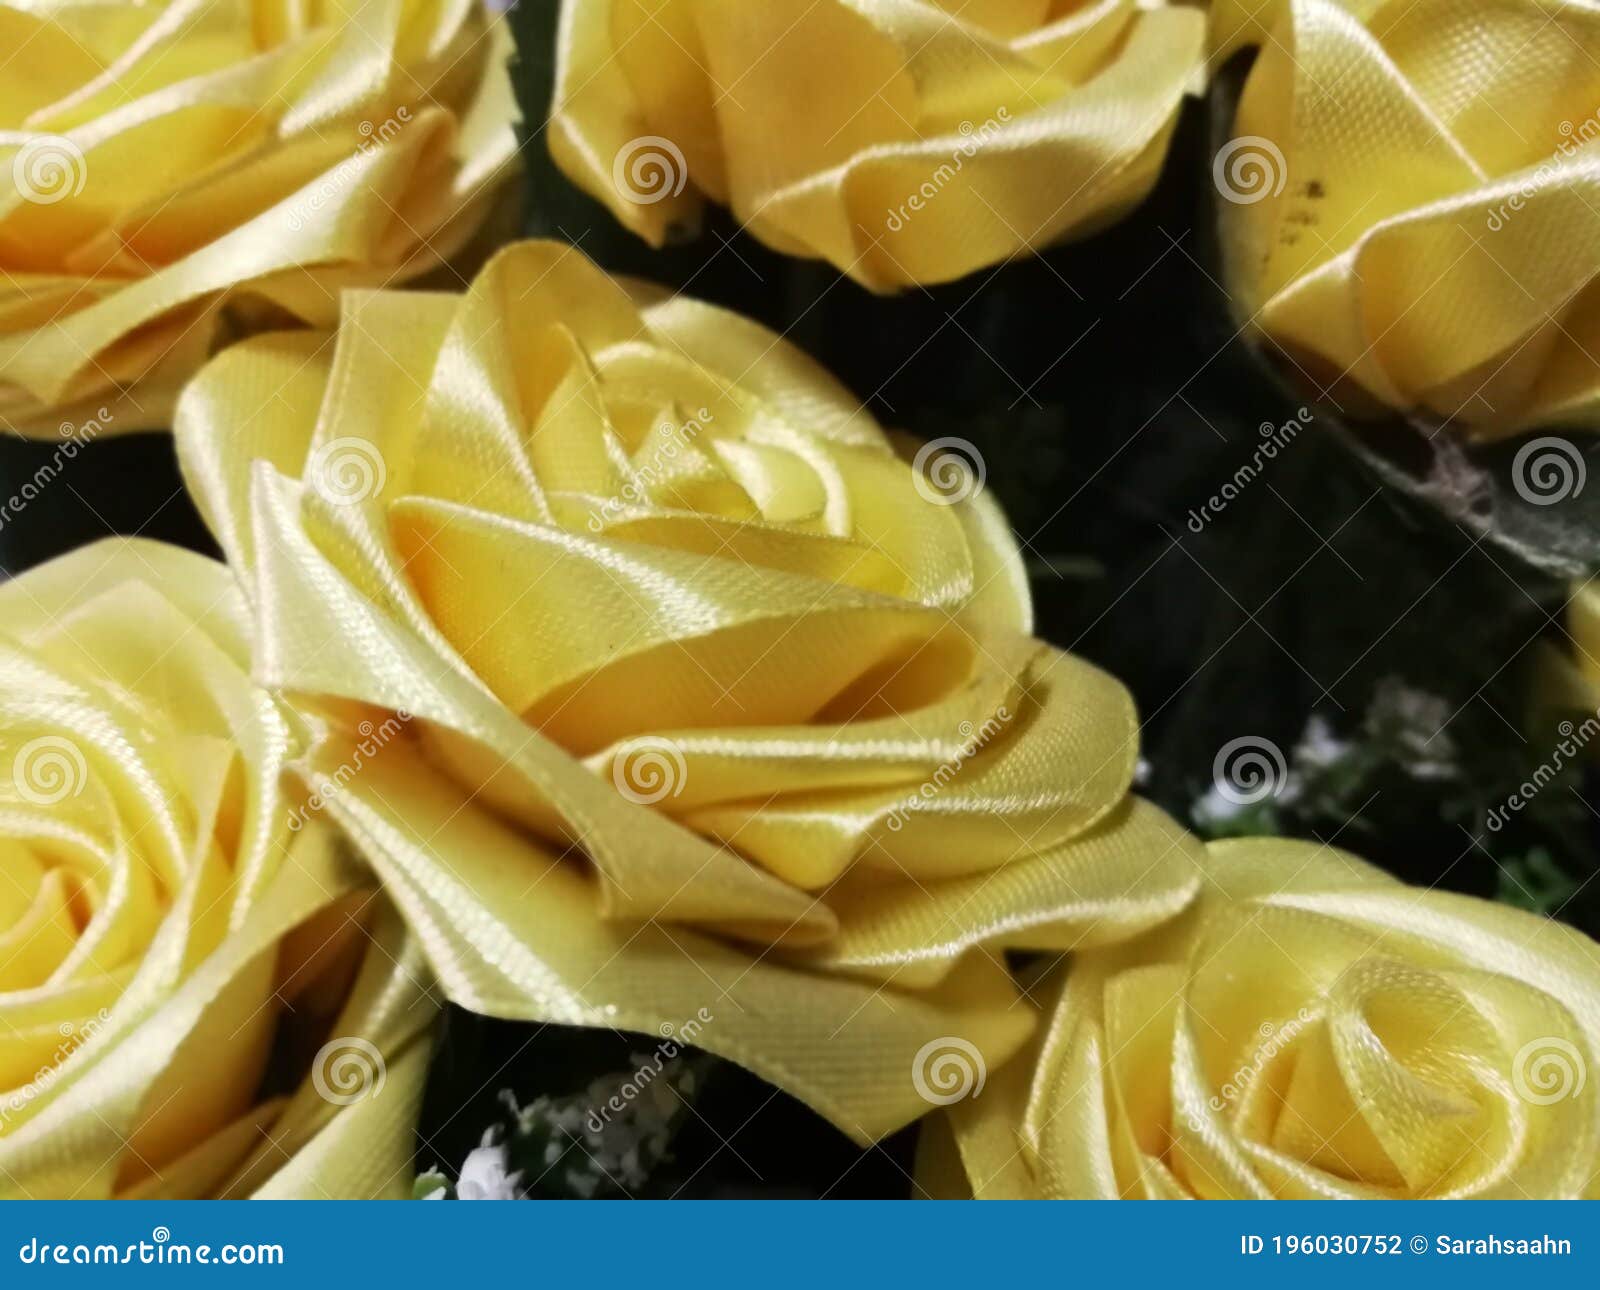 Yellow Ribbon Roses. Yellow Ribbons Folding into Roses. Stock